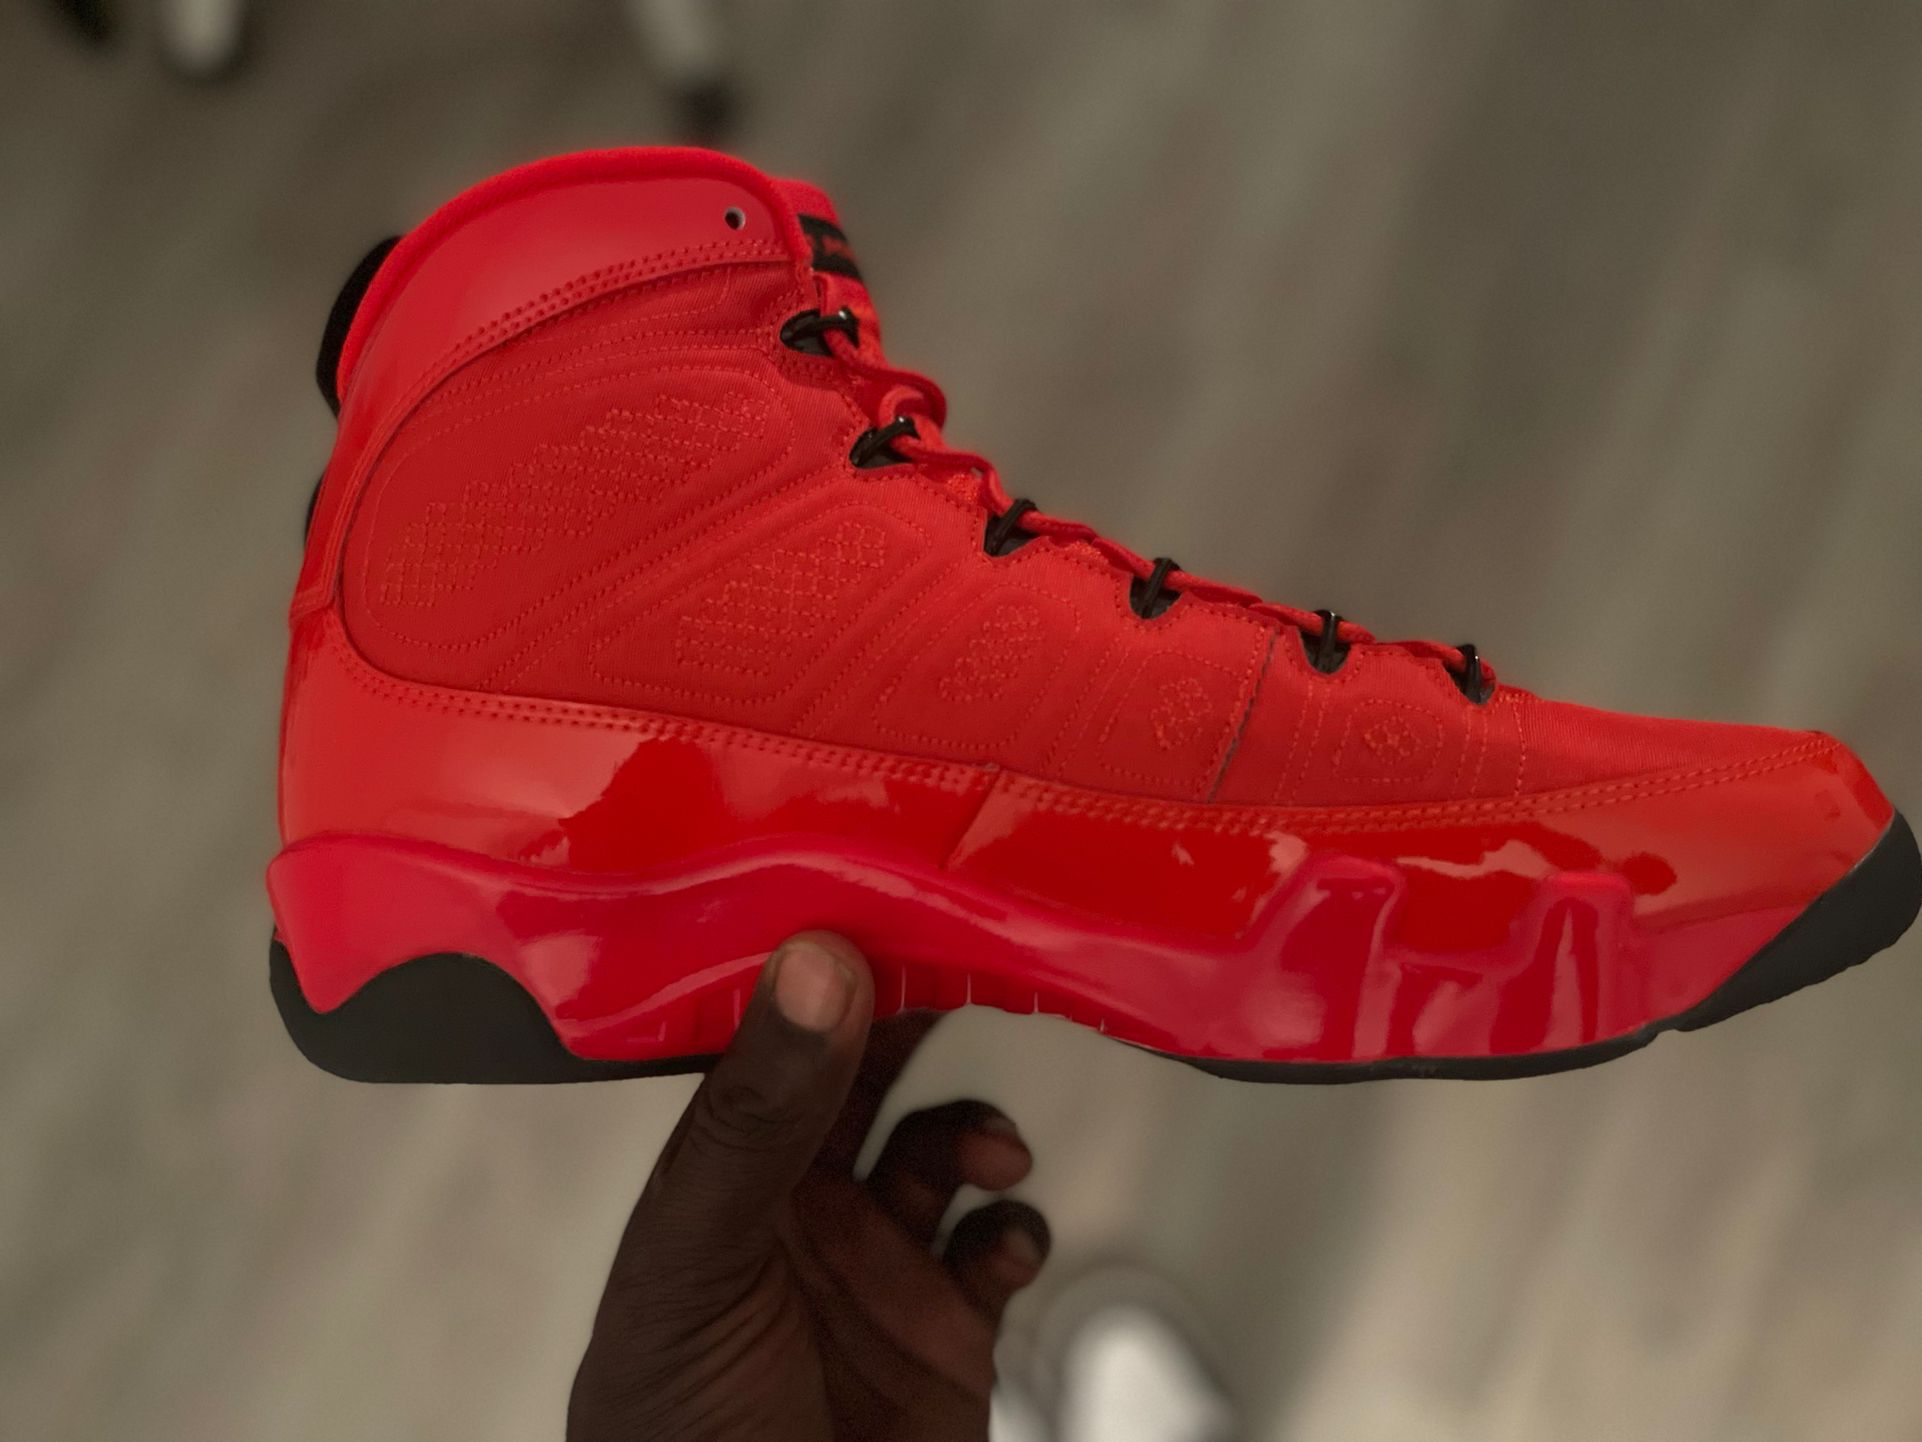 Nike Air Jordan Retro 9 “Chile Red” Size 13